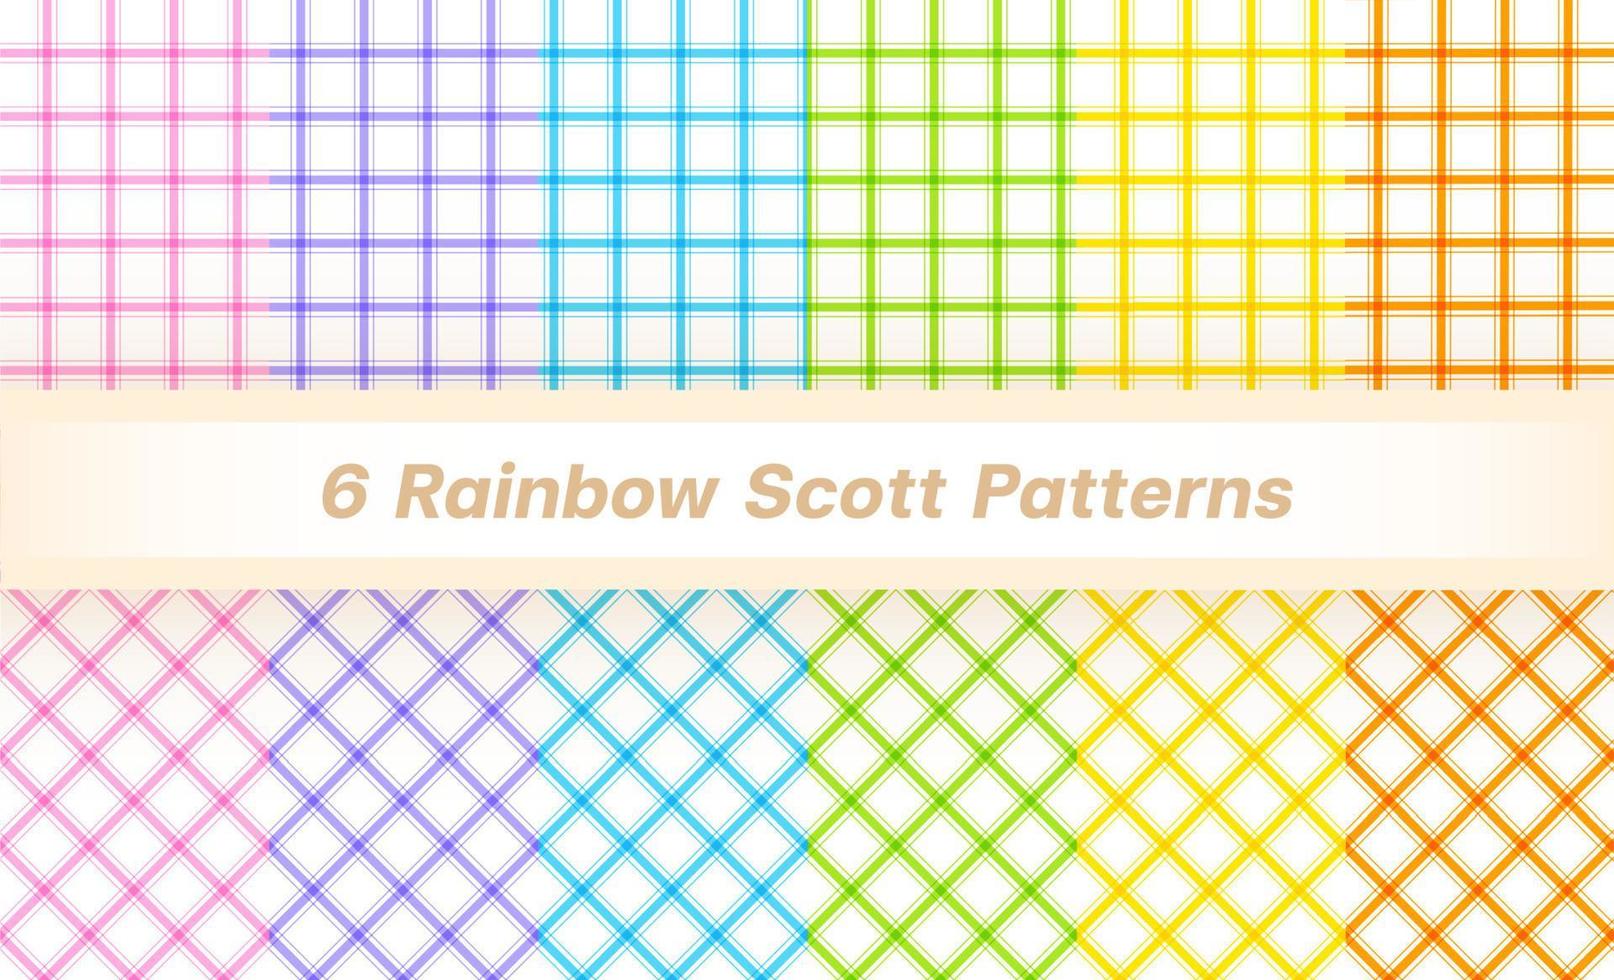 Set of 6 Pastel Rainbow Scott Plaid Tartan Gingham Line Striped Strip Checkered Patterns Background Vector Illustration Tablecloth, Picnic mat wrap paper